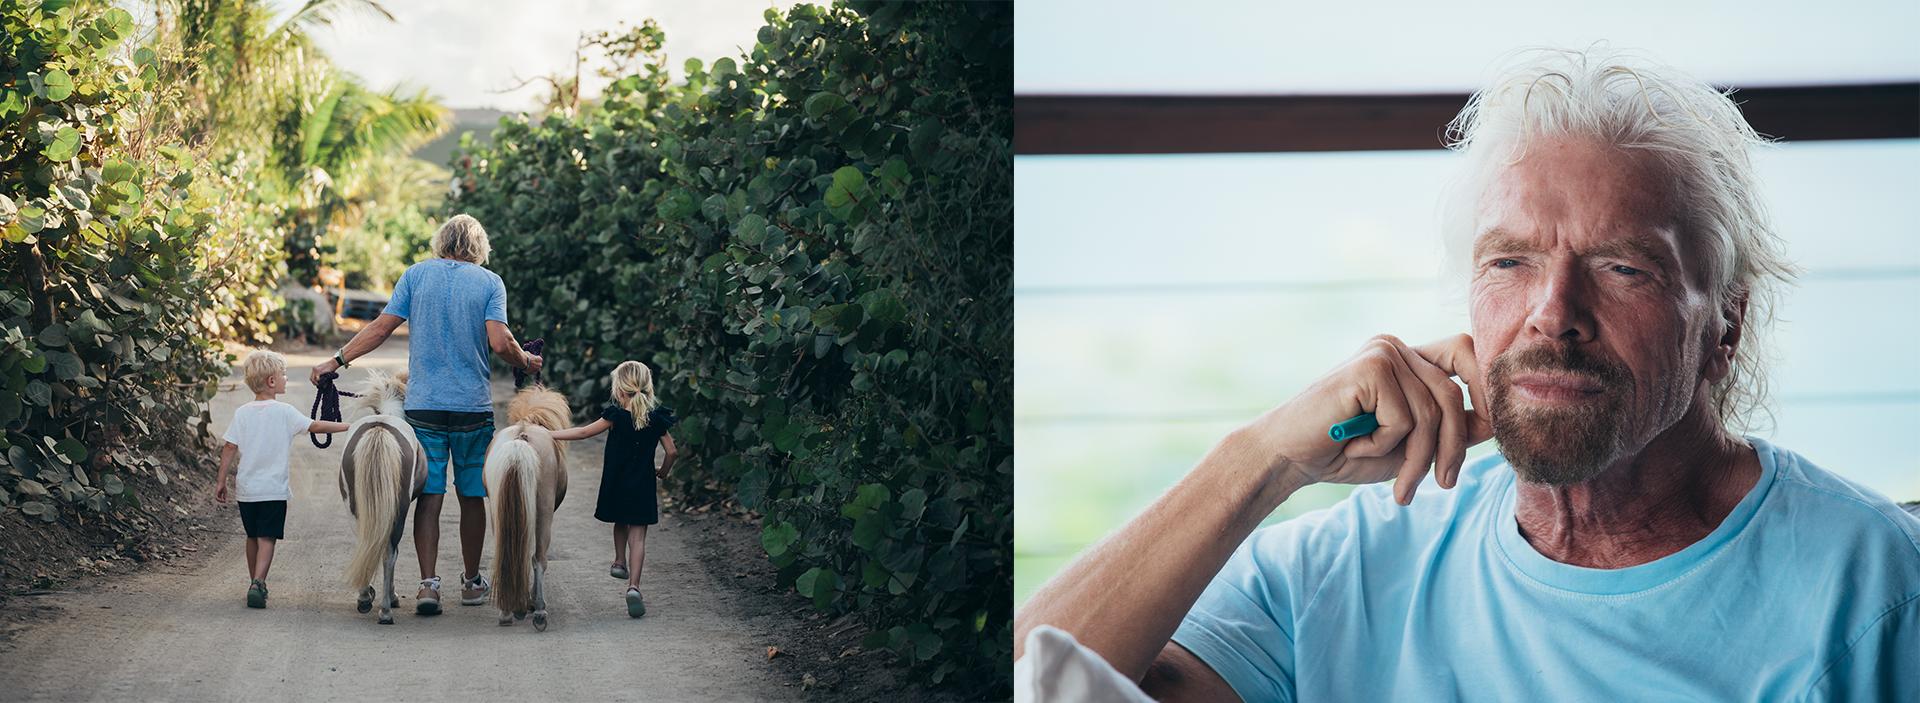 PORTRAITS - Richard Branson and his grandchildren, Necker Island 2019